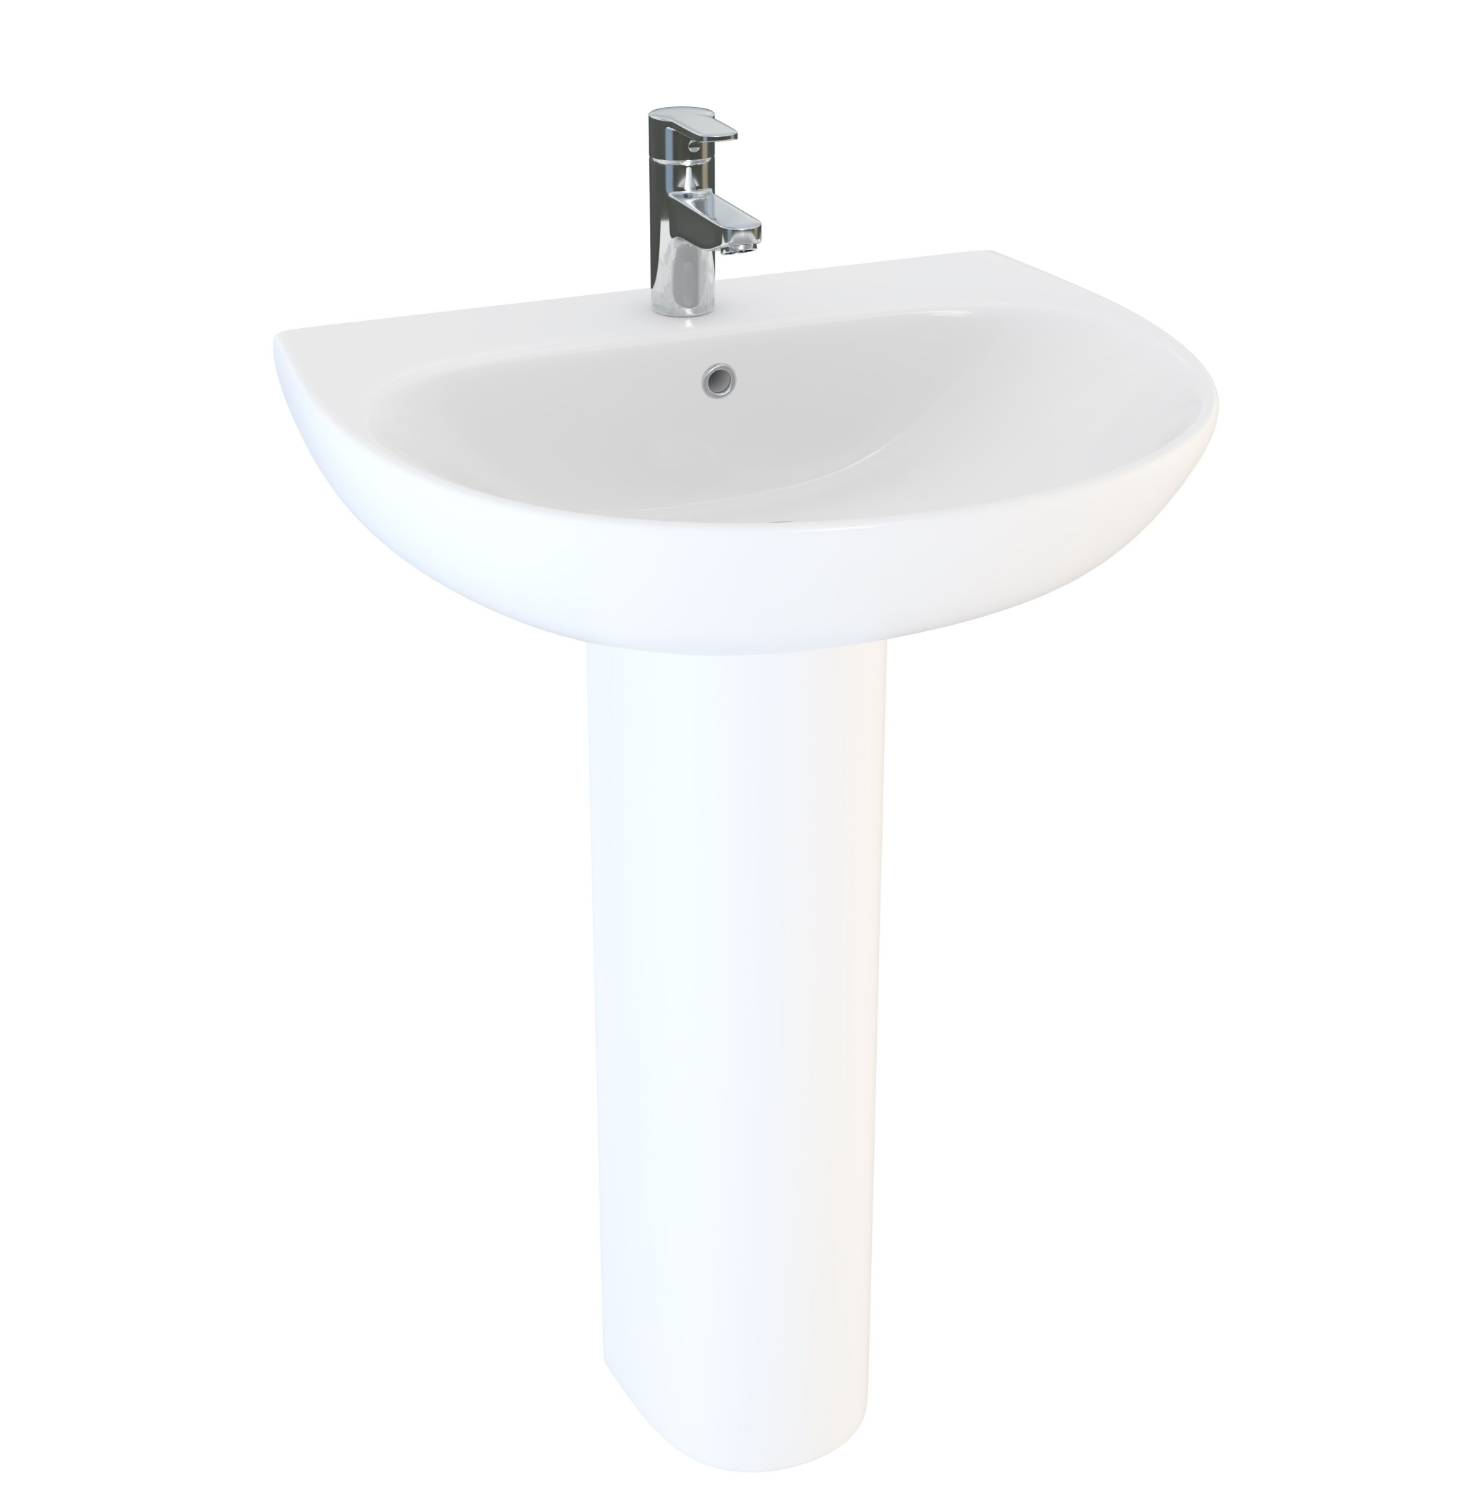 Designer Series 5 45 cm 1TH basin and pedestal